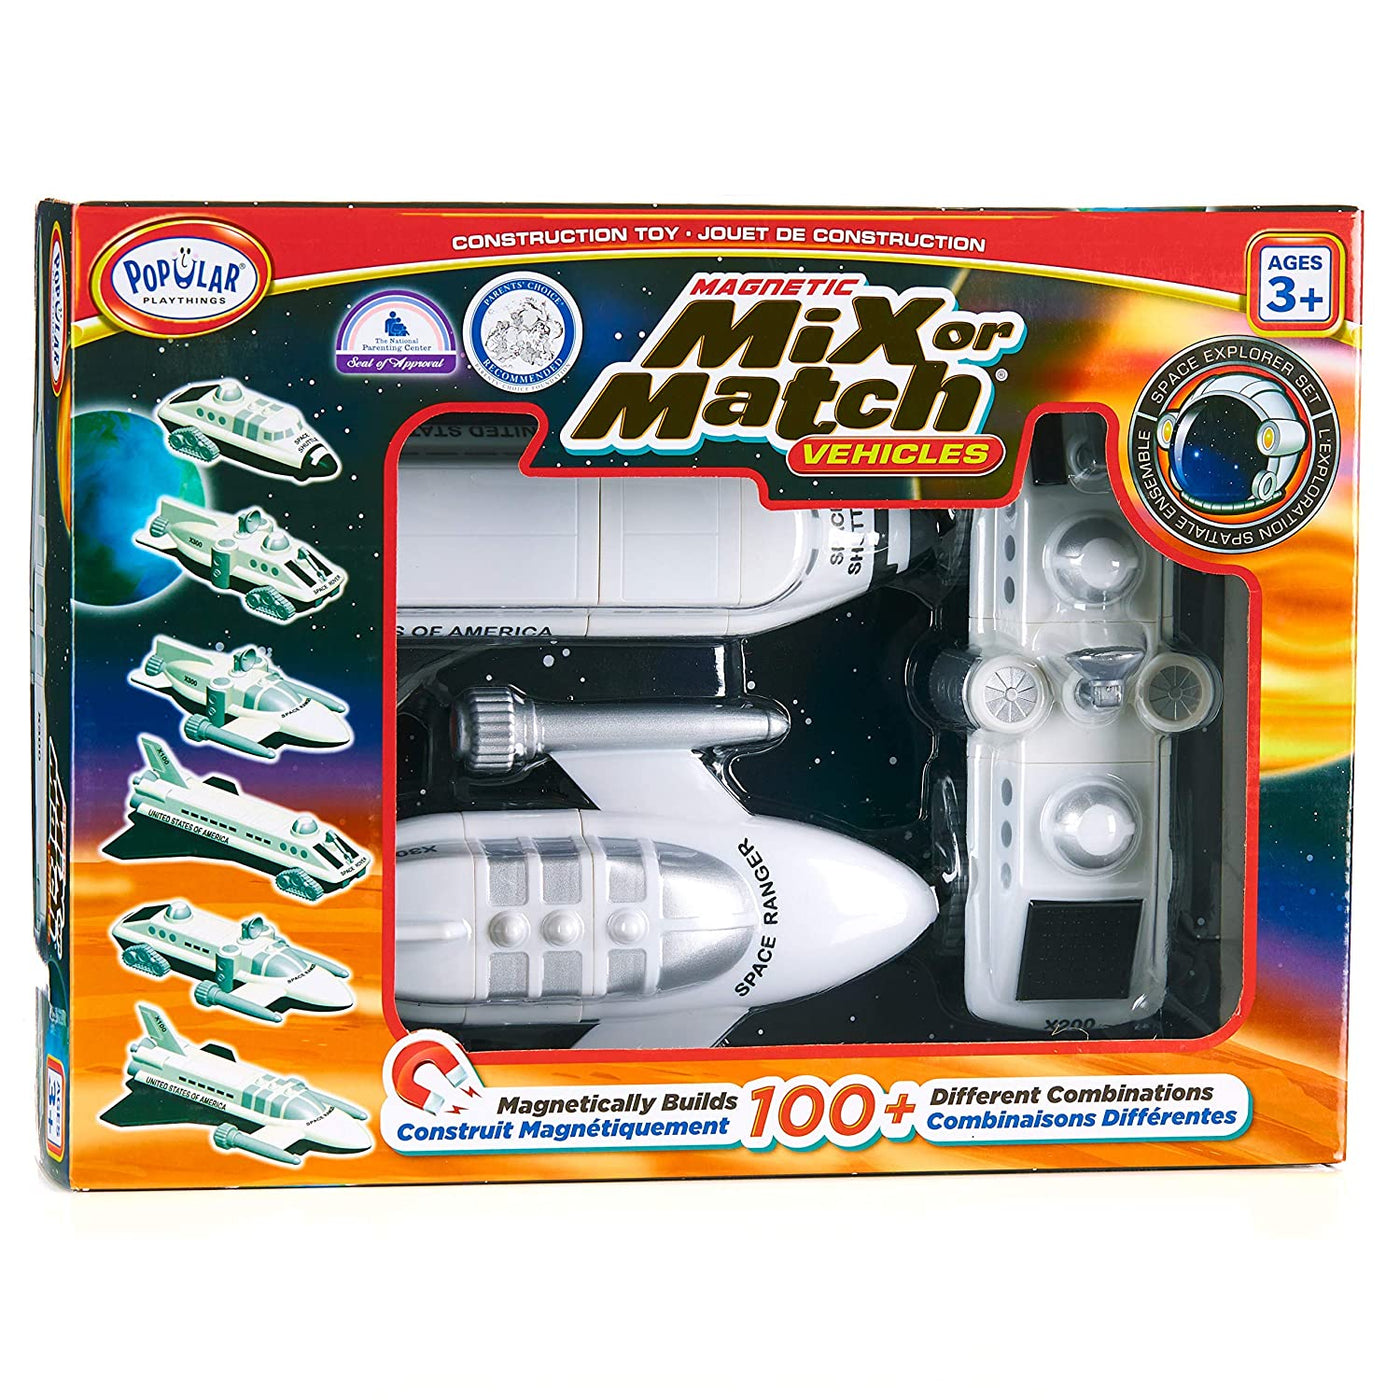 Mix or Match: Vehicles Space Explorer Set